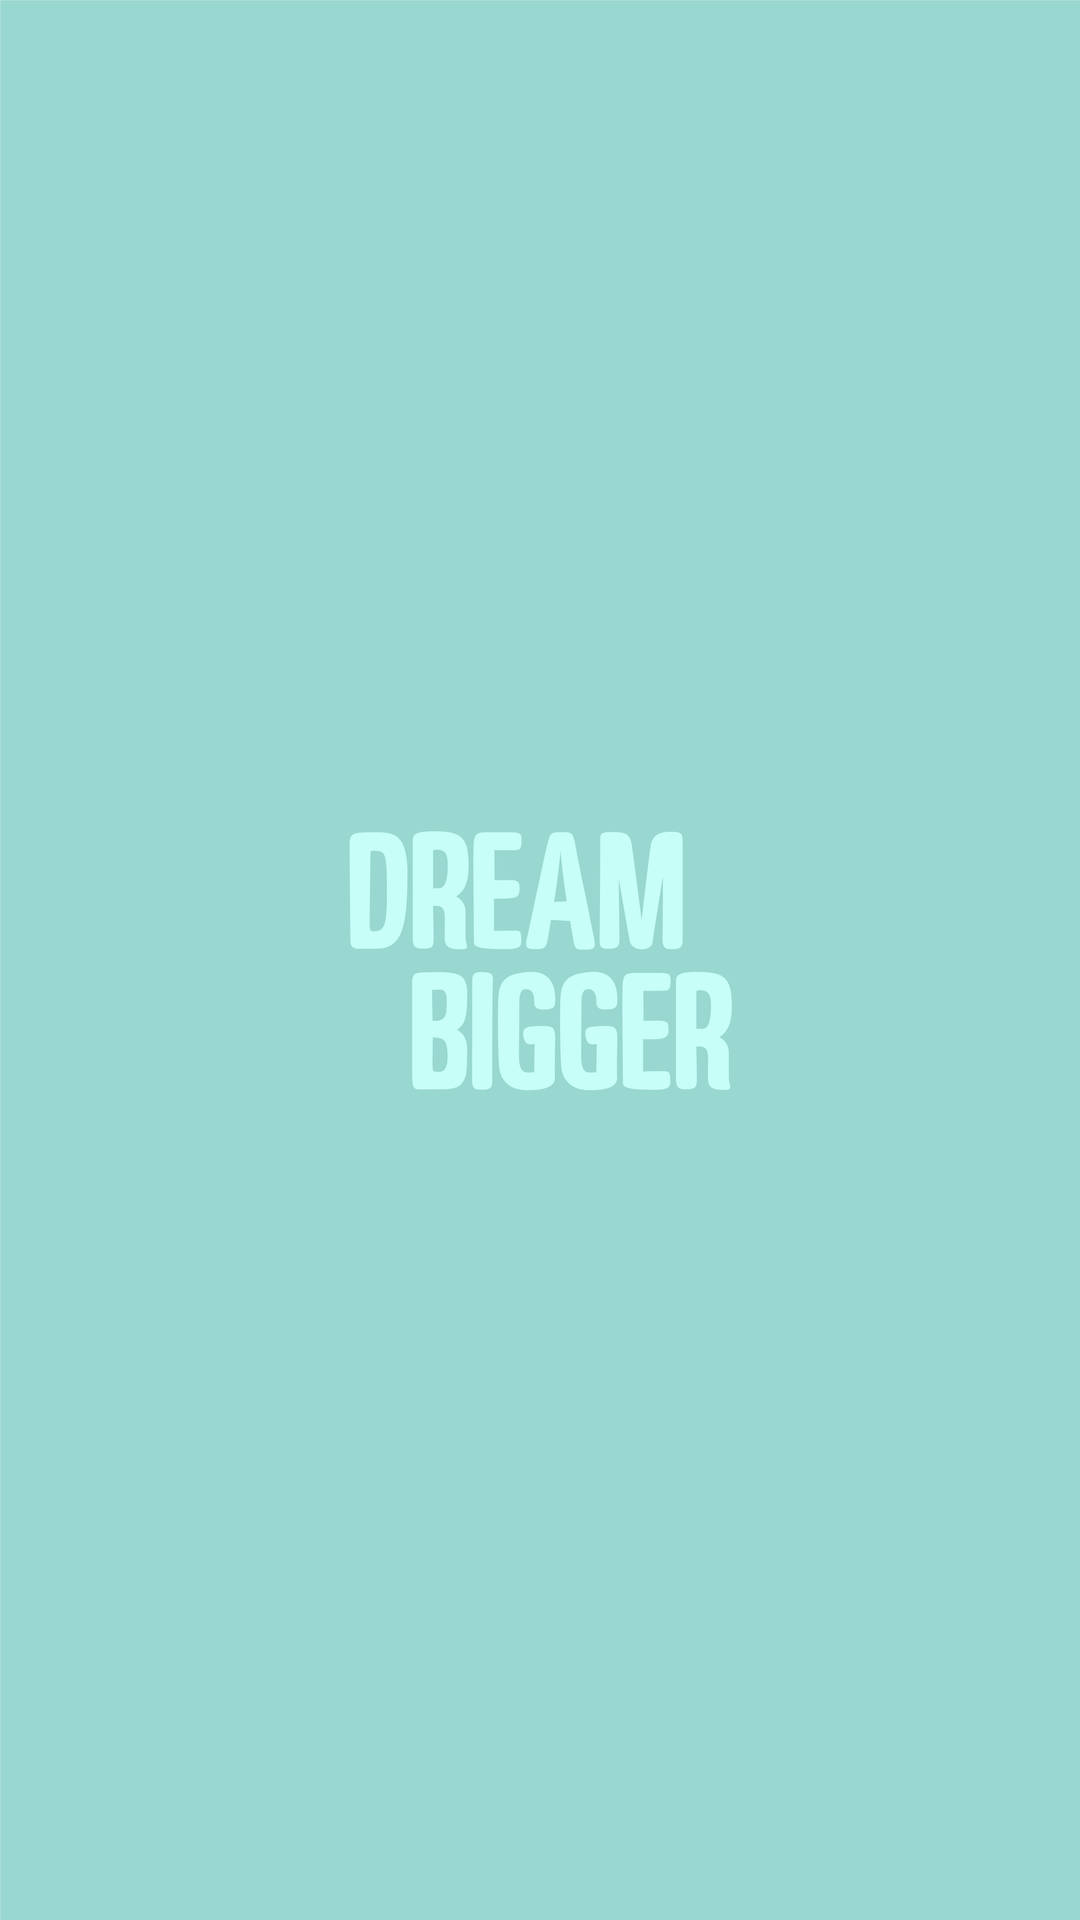 Minimalist Motivational Big Dreams Wallpaper